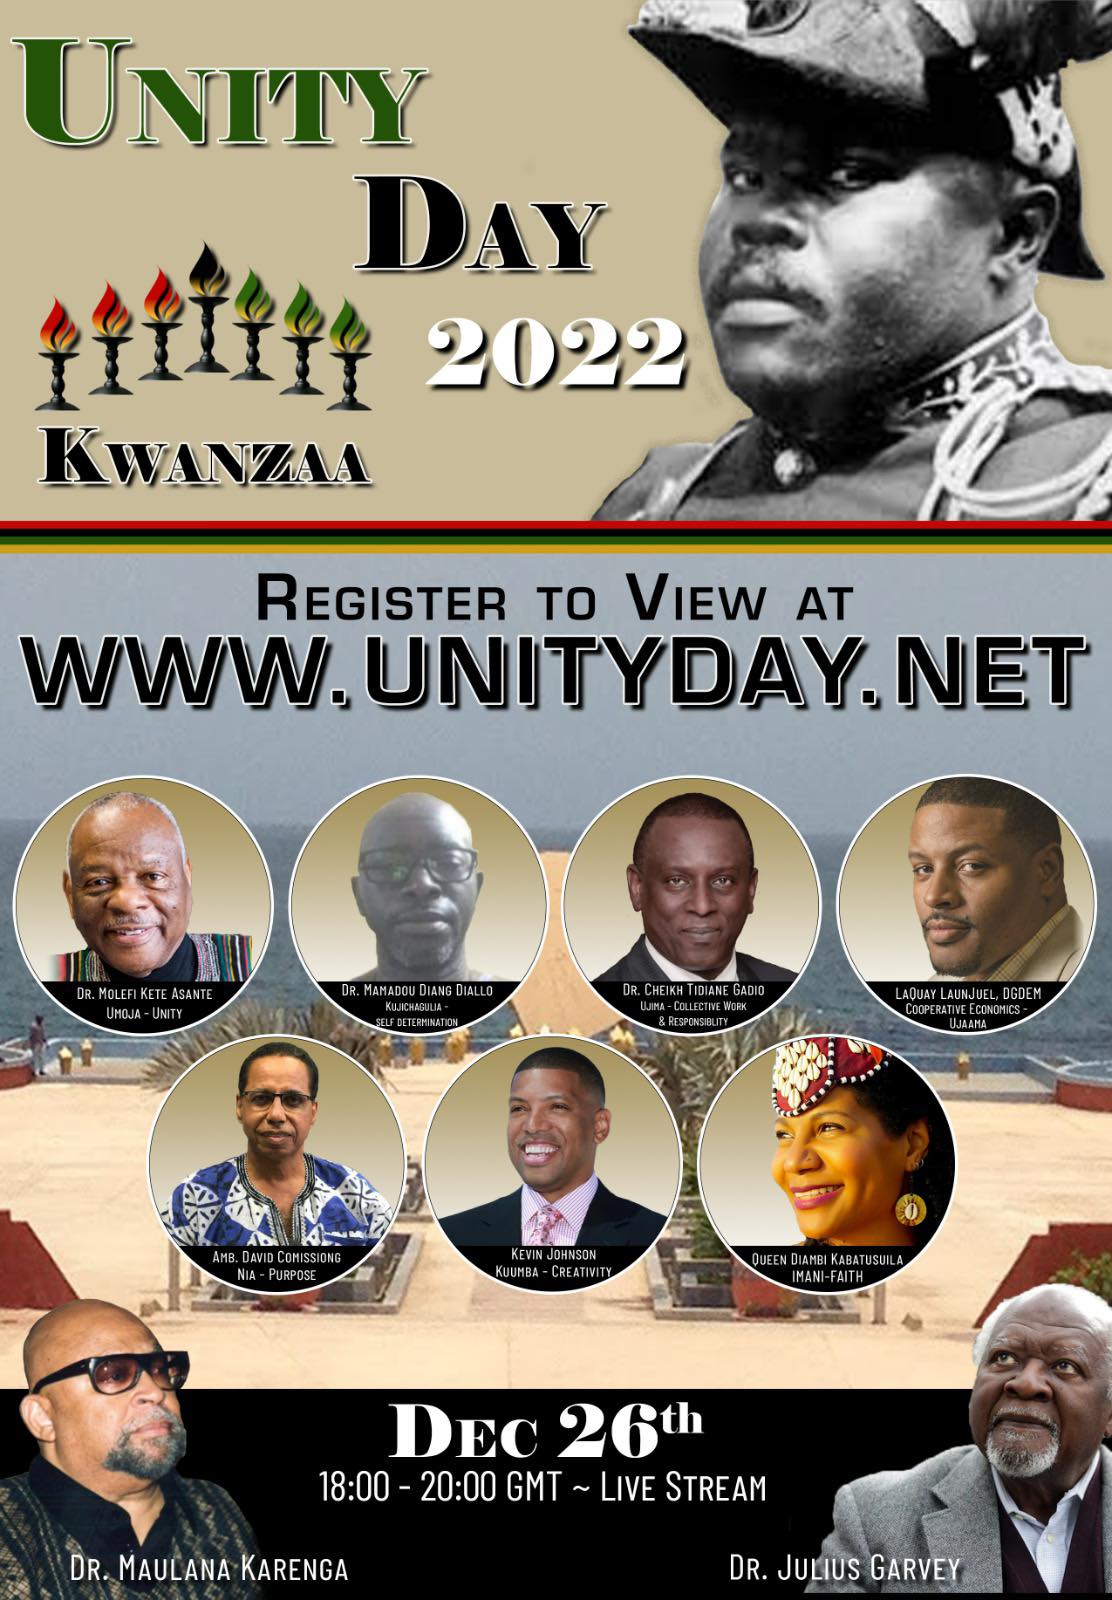 Global Unity Day Kwanzaa Celebration to Feature AC Native